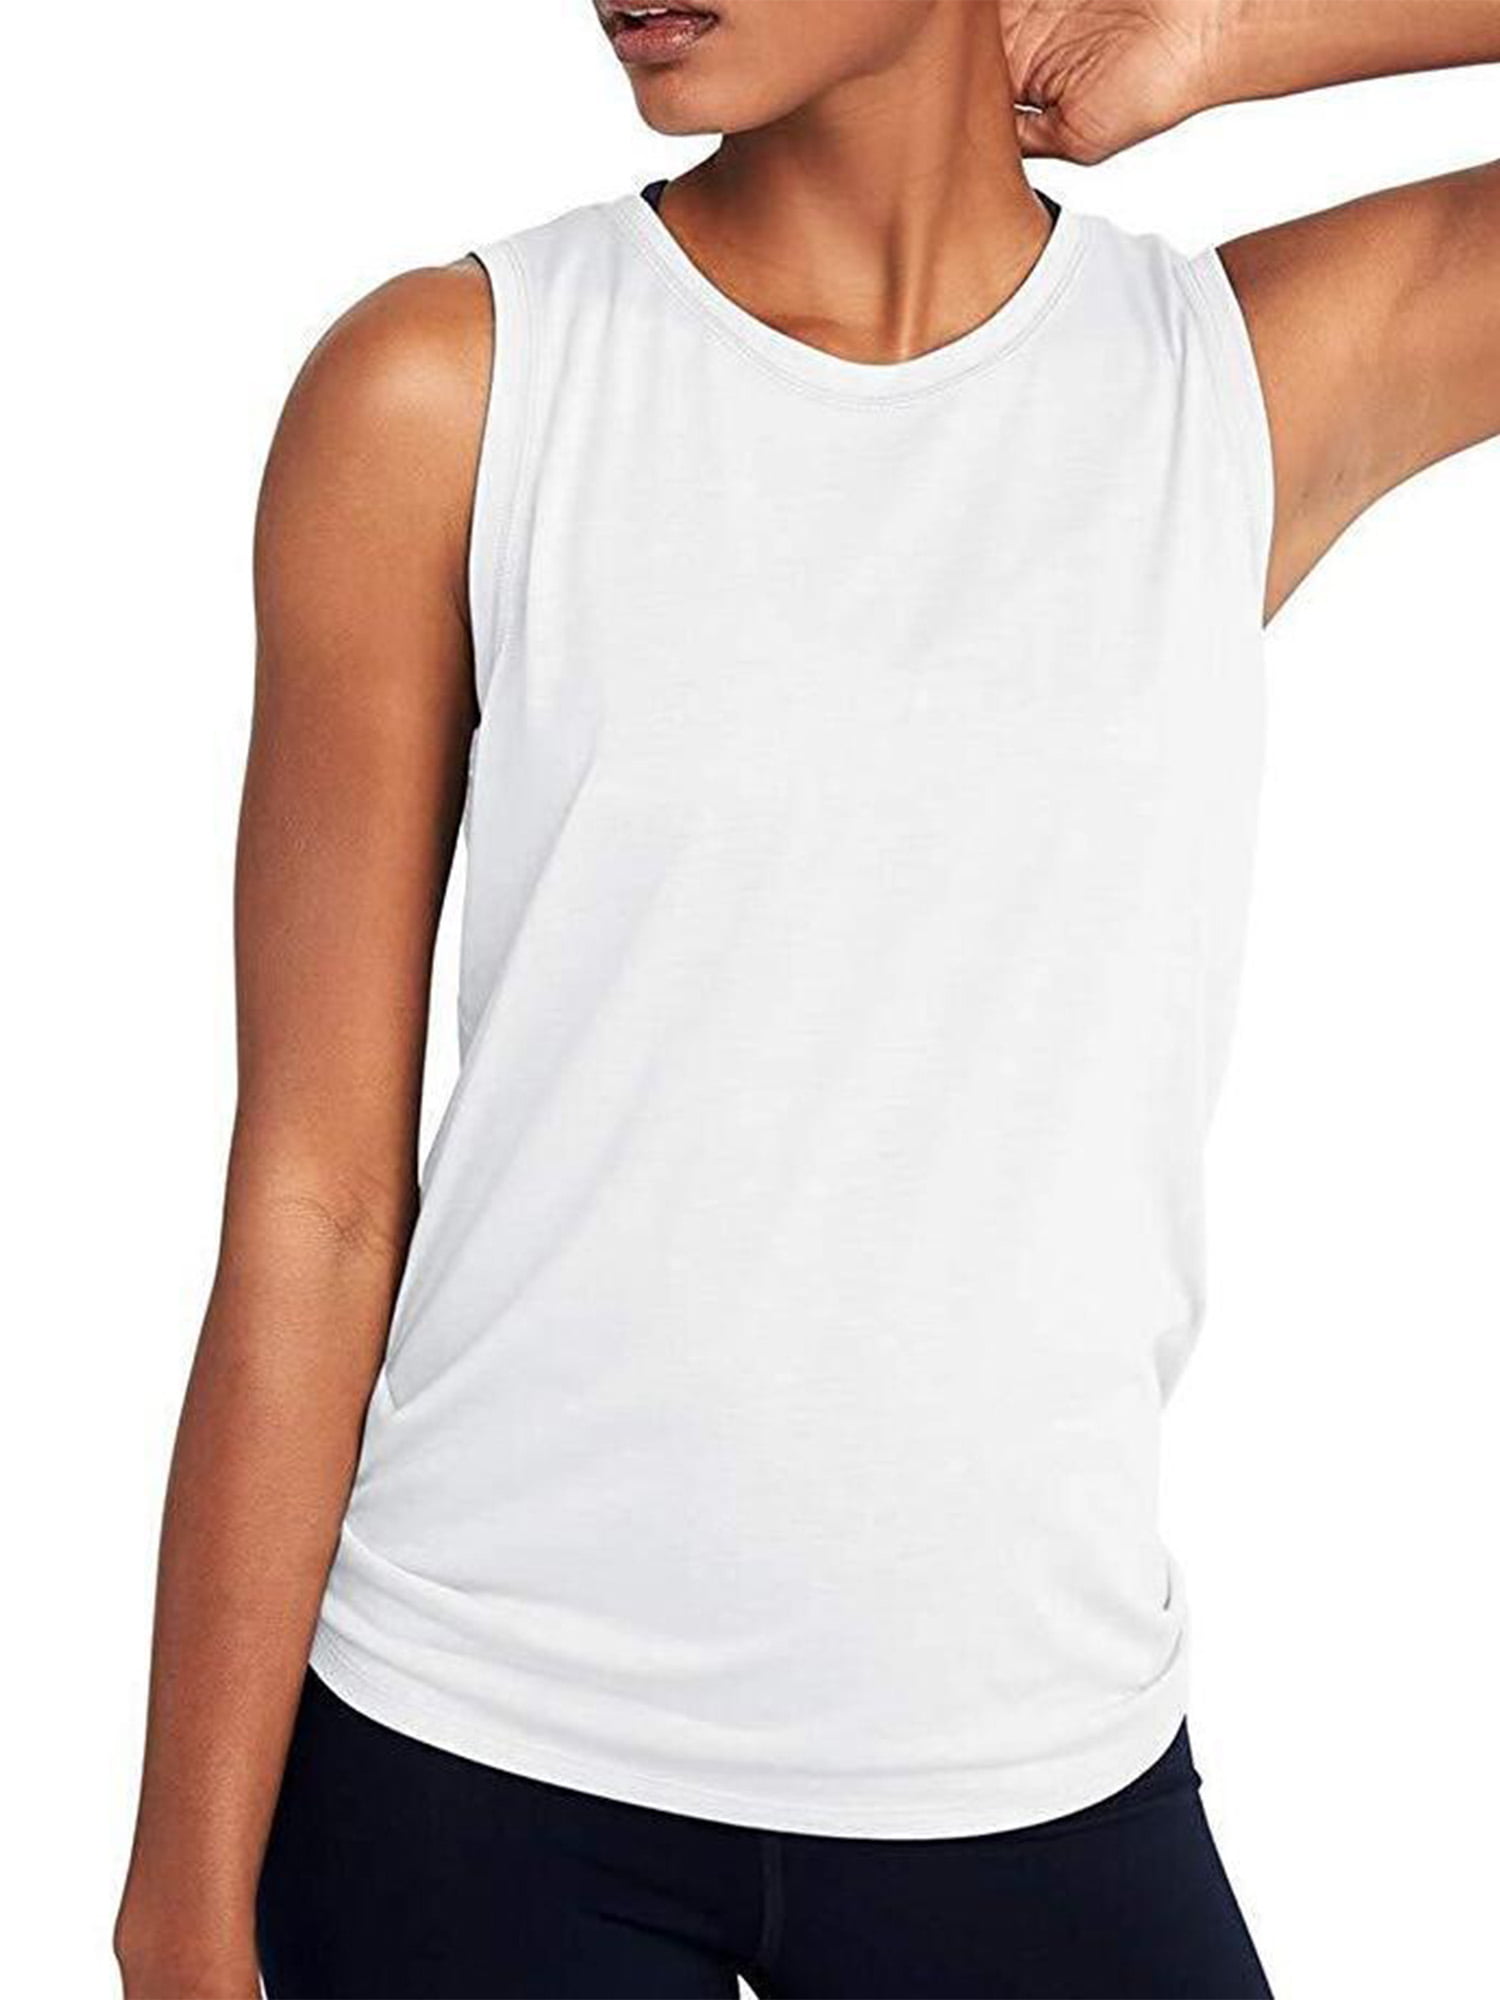 Tank Top Women chaofanjiancai Camis Cotton Blouse Tops Summer Sleeveless T-Shirt Yoga Workout 